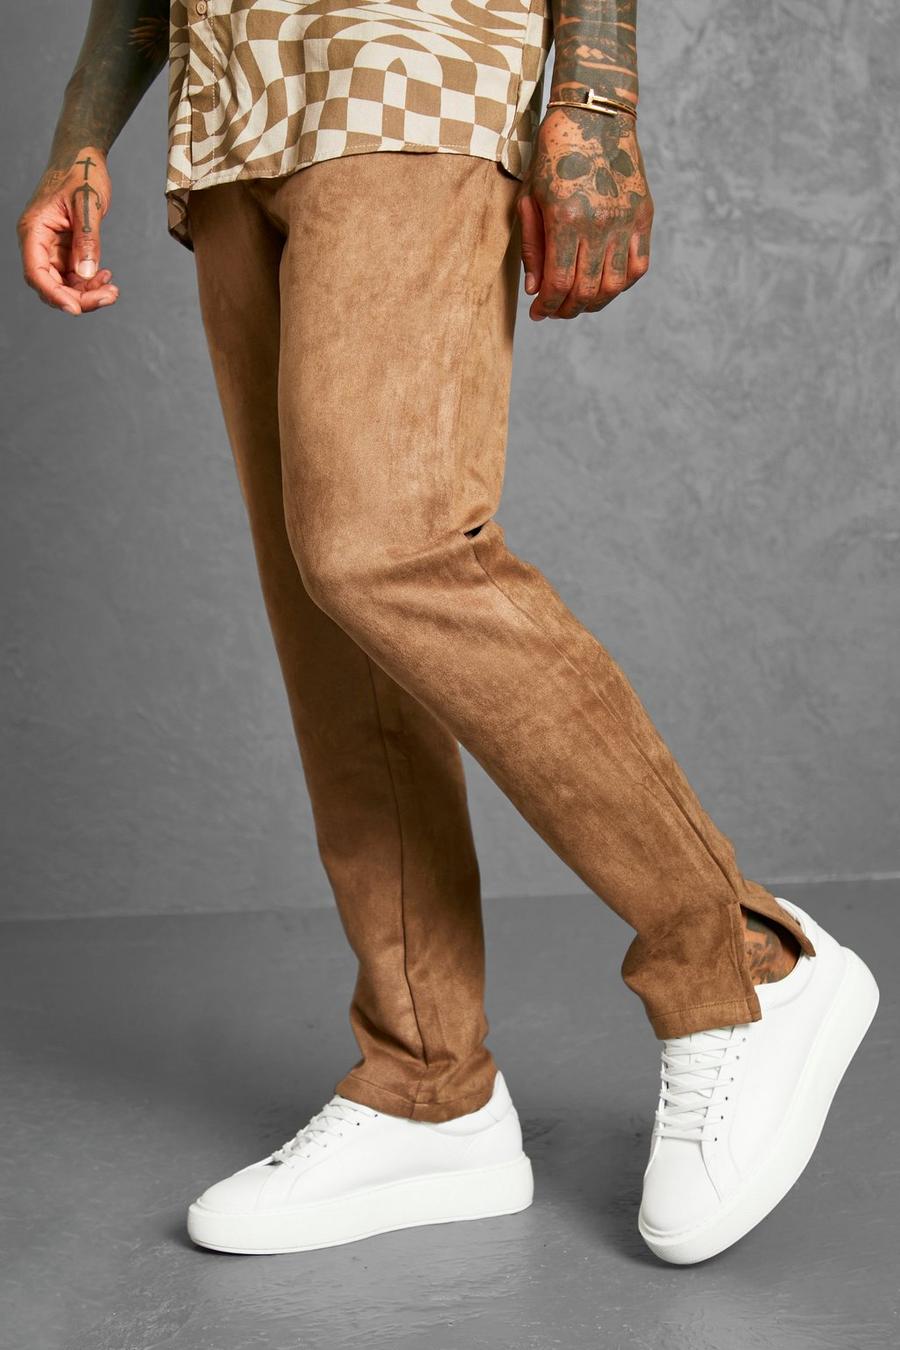 https://media.boohoo.com/i/boohoo/amm06682_tan_xl/male-tan-slim-fit-suede-trousers/?w=900&qlt=default&fmt.jp2.qlt=70&fmt=auto&sm=fit